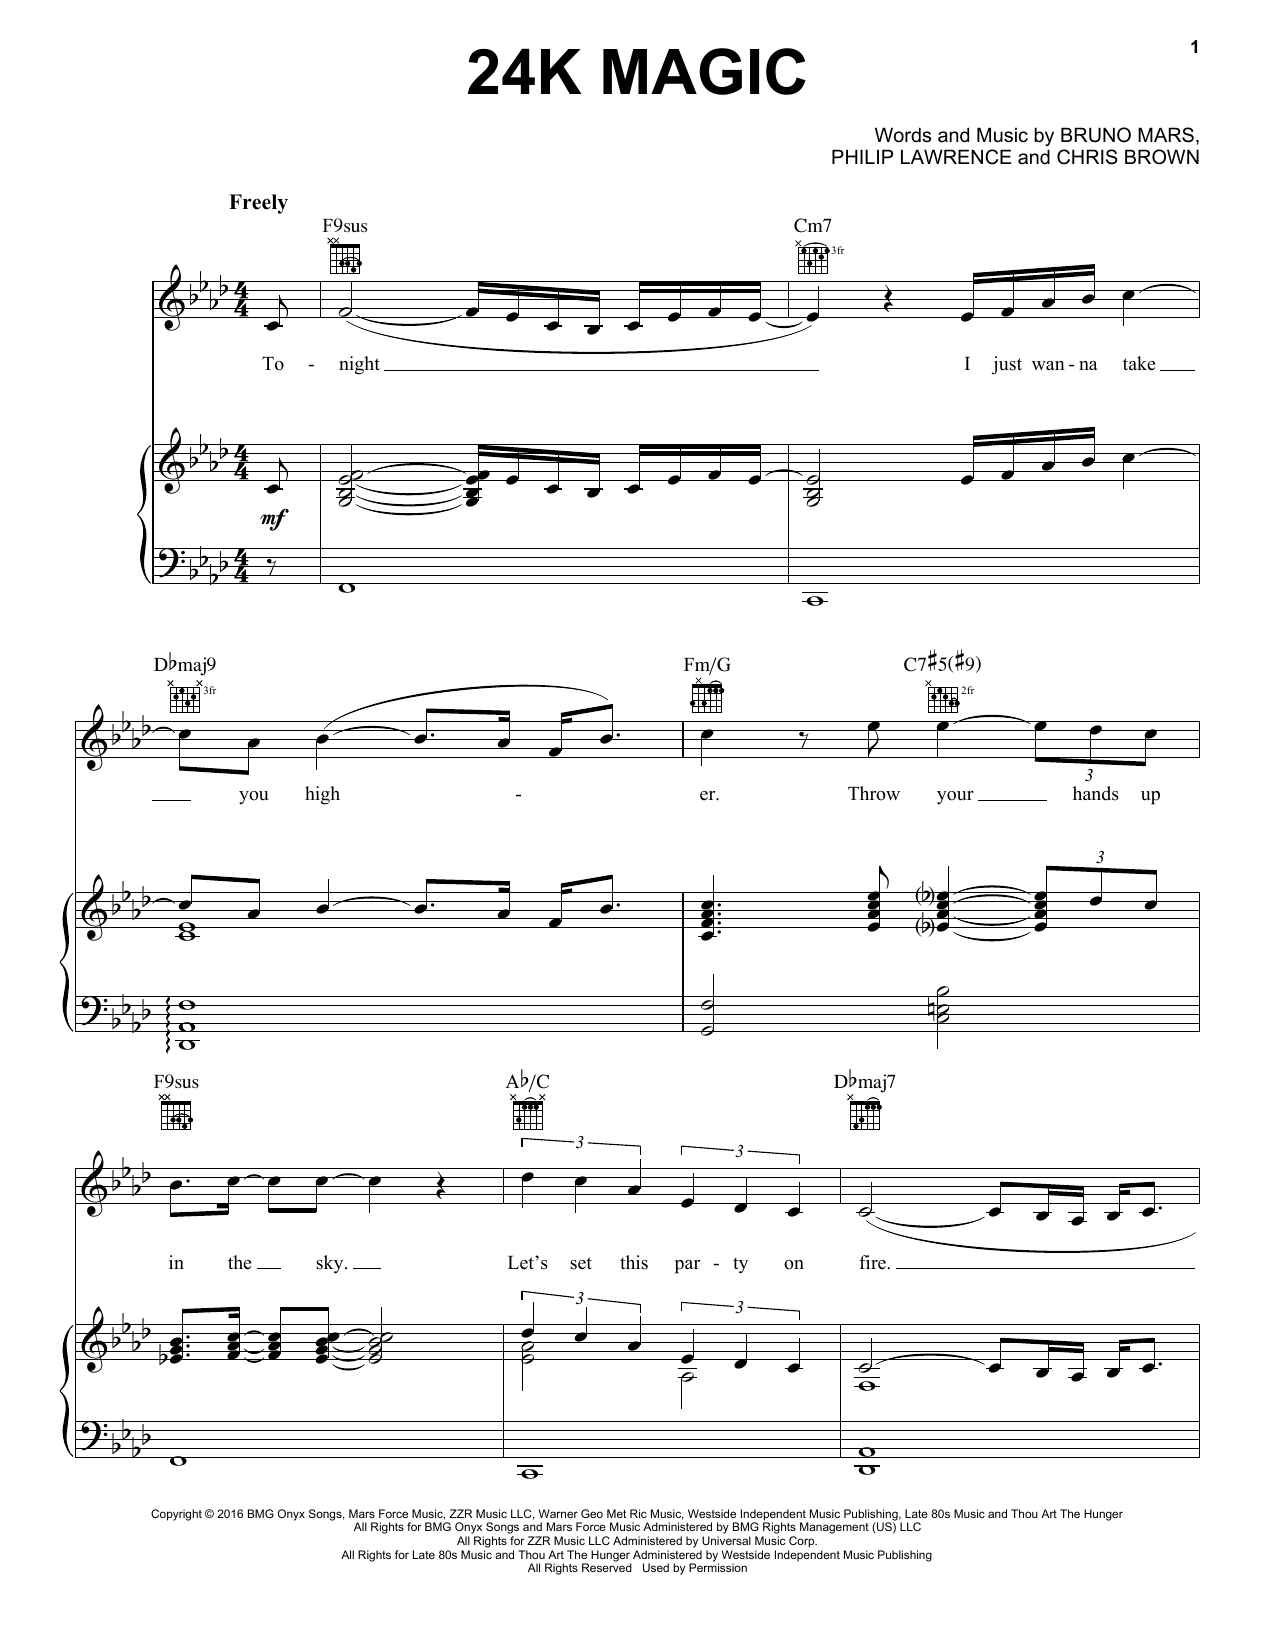 Bruno Mars 24K Magic Sheet Music Notes & Chords for Piano (Big Notes) - Download or Print PDF